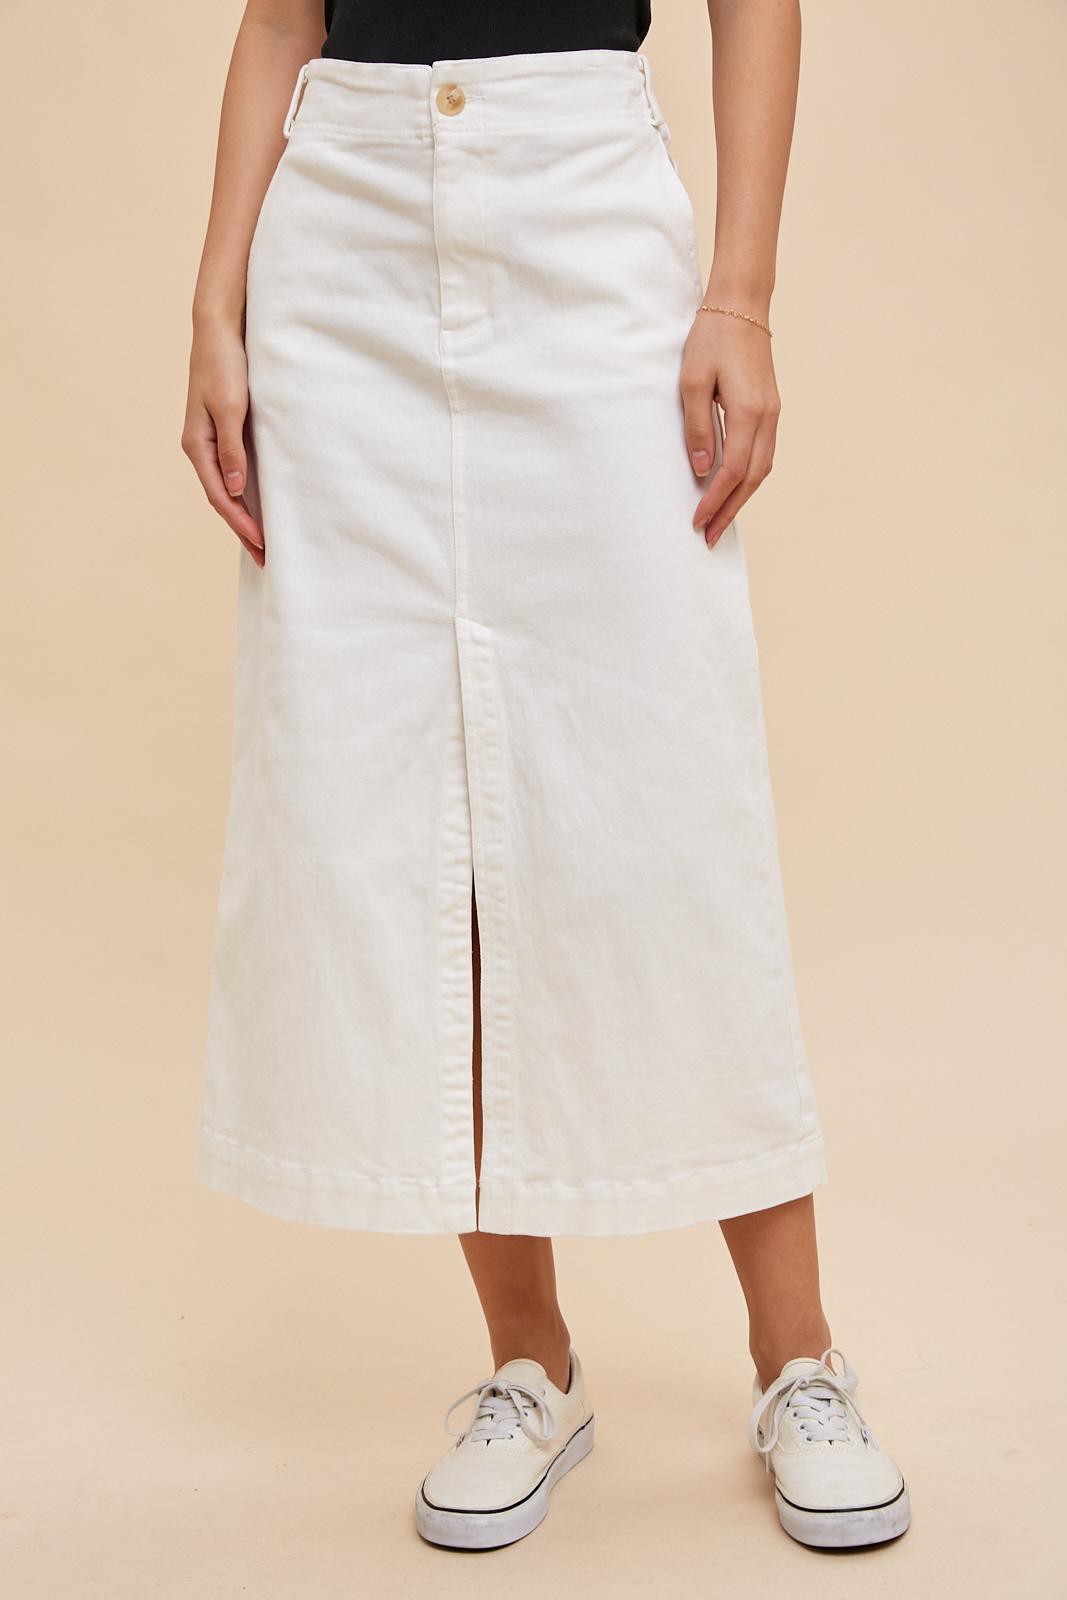 White Twill Pencil Skirt